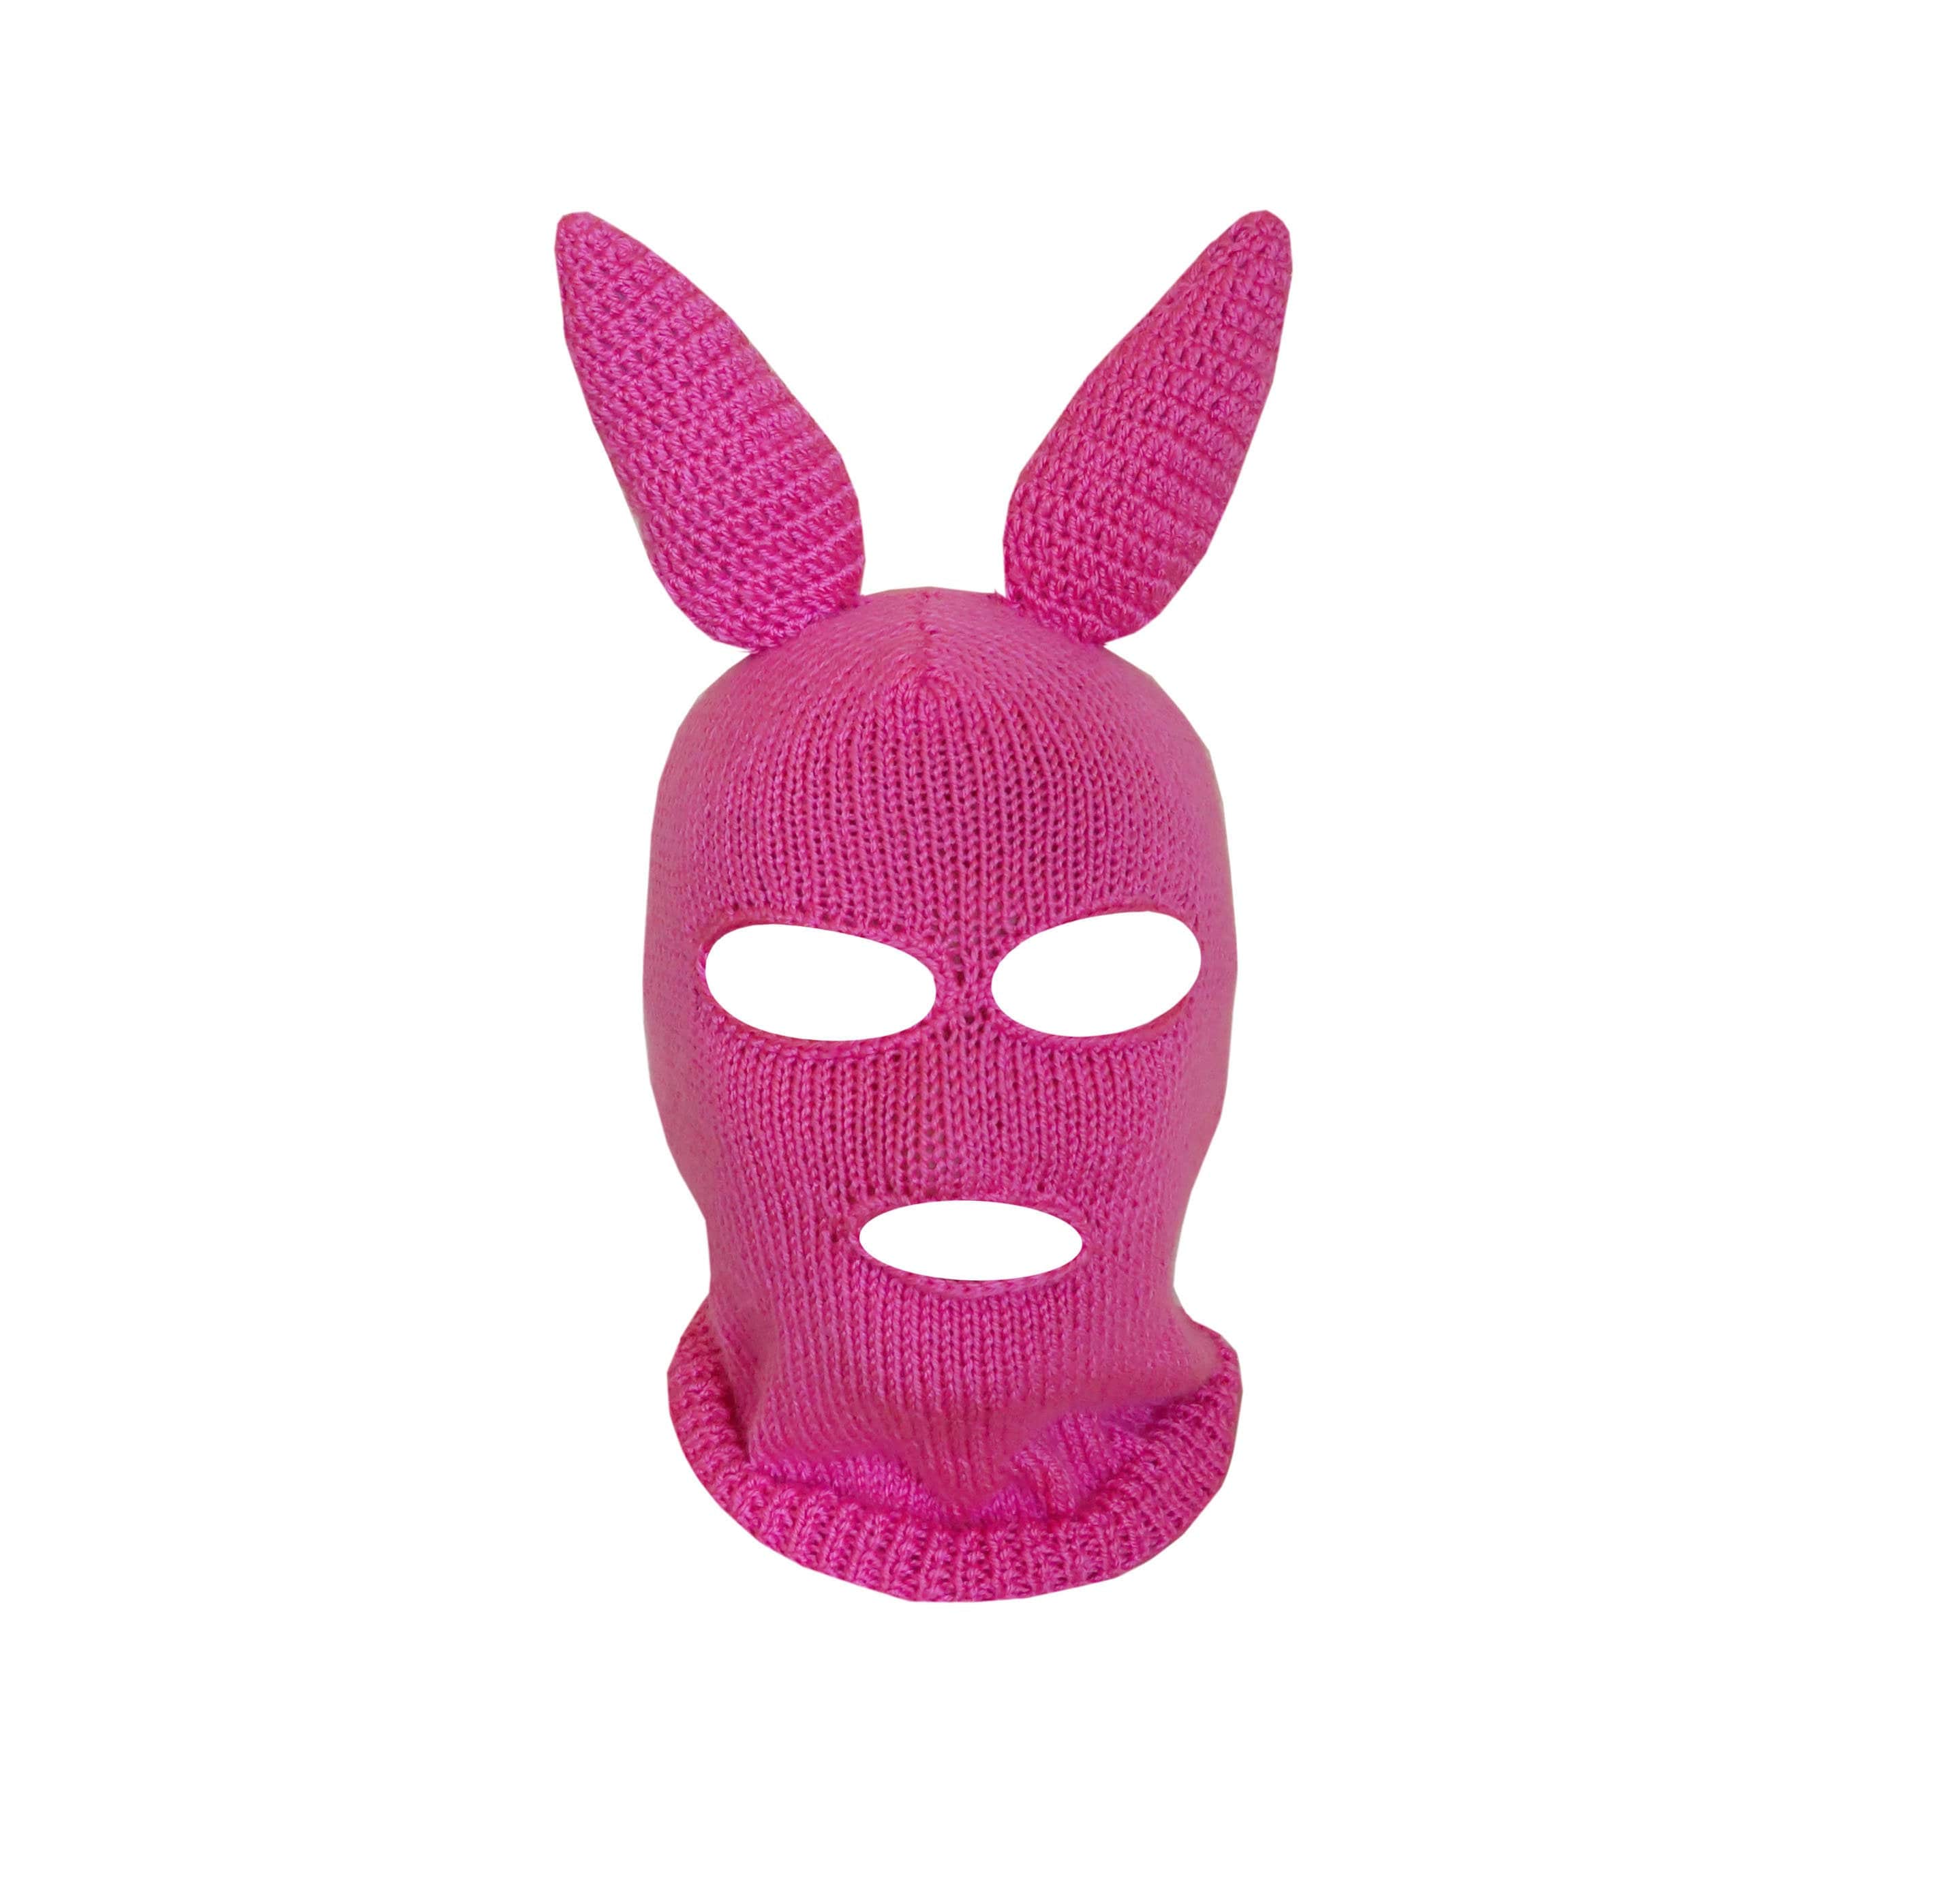 Rhinestone Ski Mask Goggles Glasses Masquerade Bling Bunny Rabbit Party  Cosplay Prop Ski Masks Pink